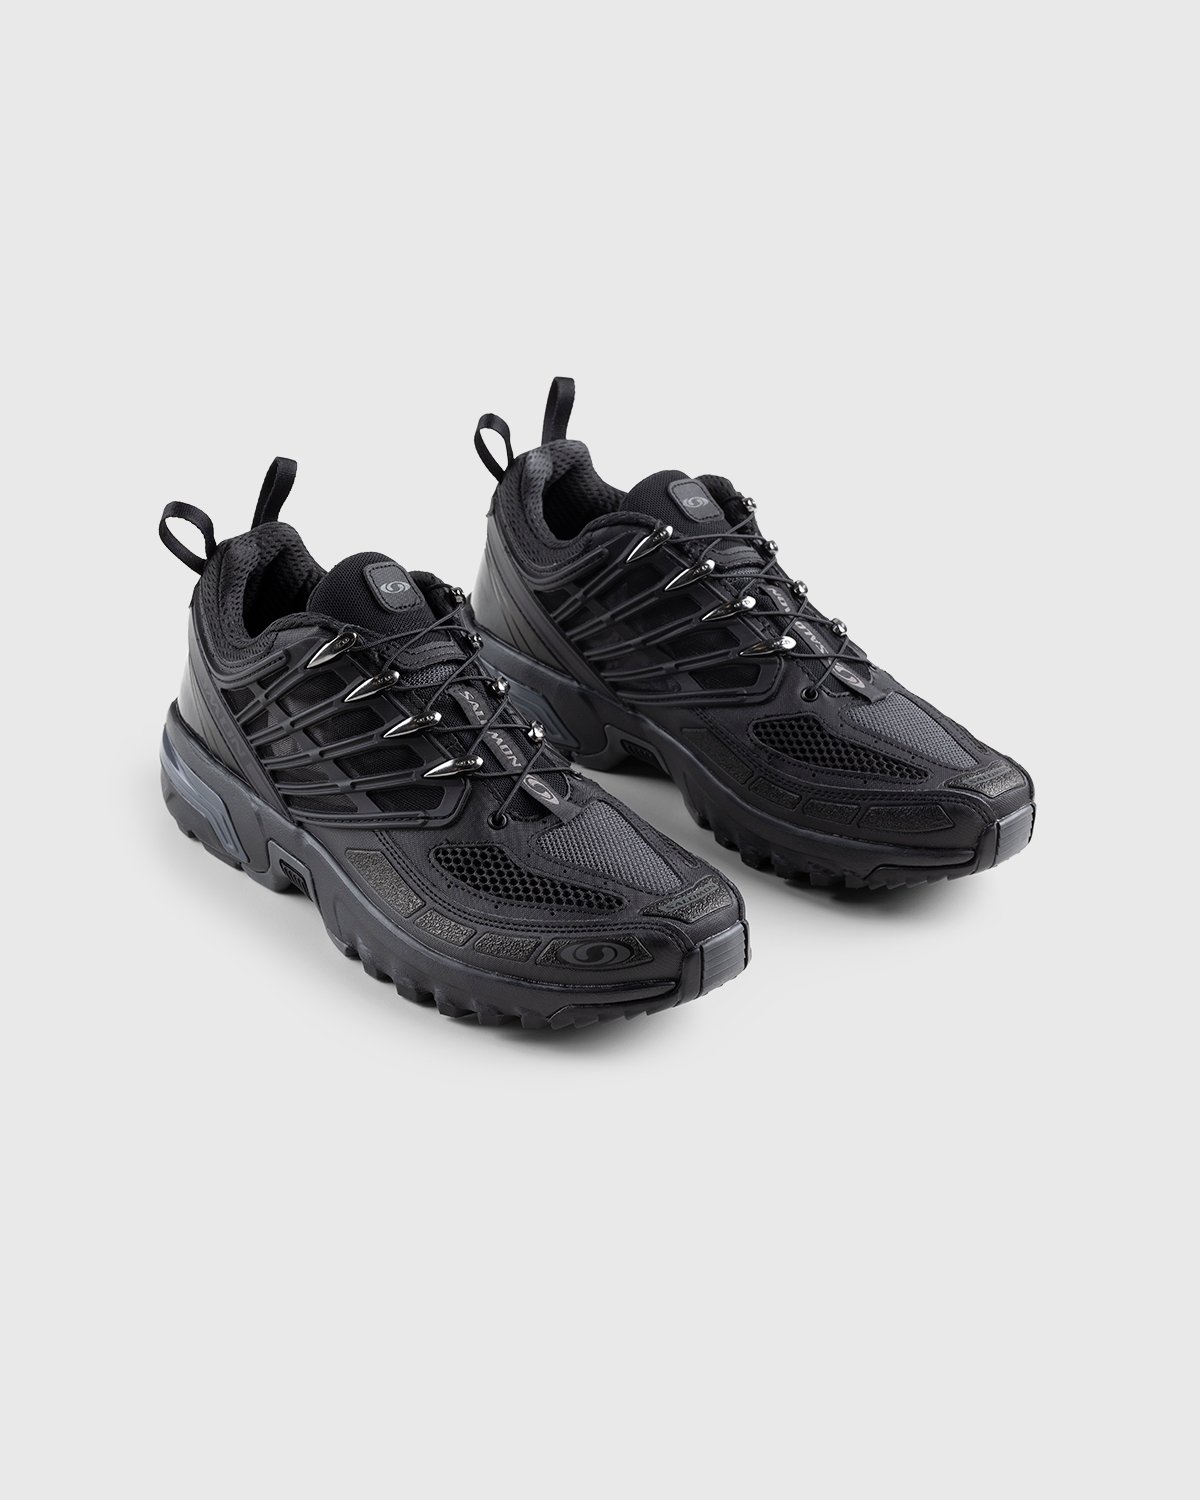 Salomon - ACS PRO Black/Black/Black - Low Top Sneakers - Black - Image 3